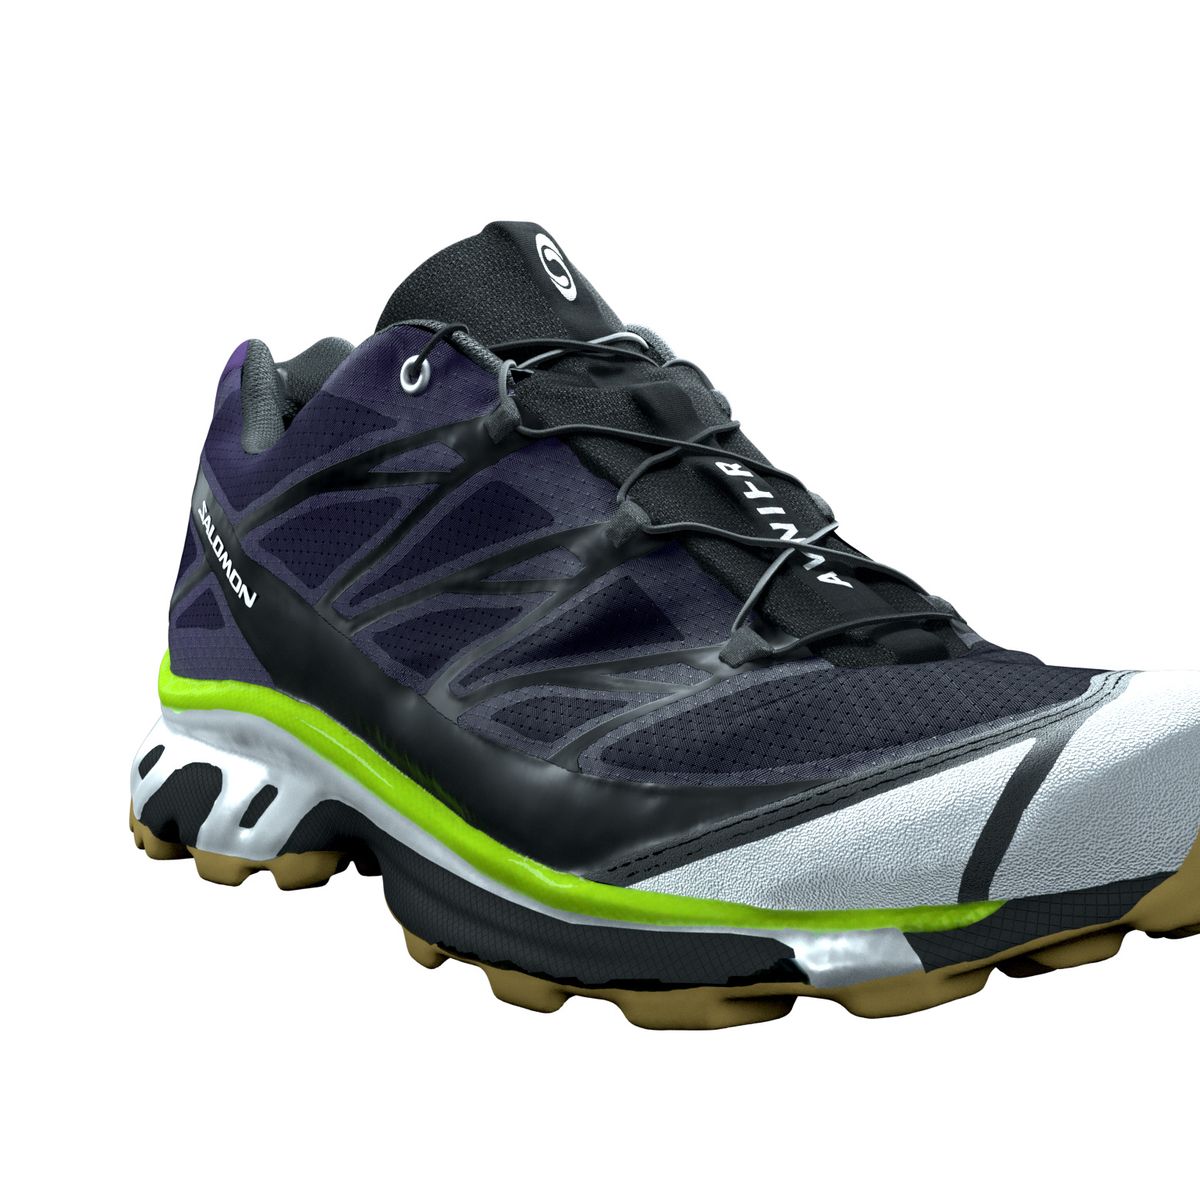 Salomon S/Lab XT-5 Sneaker Releases